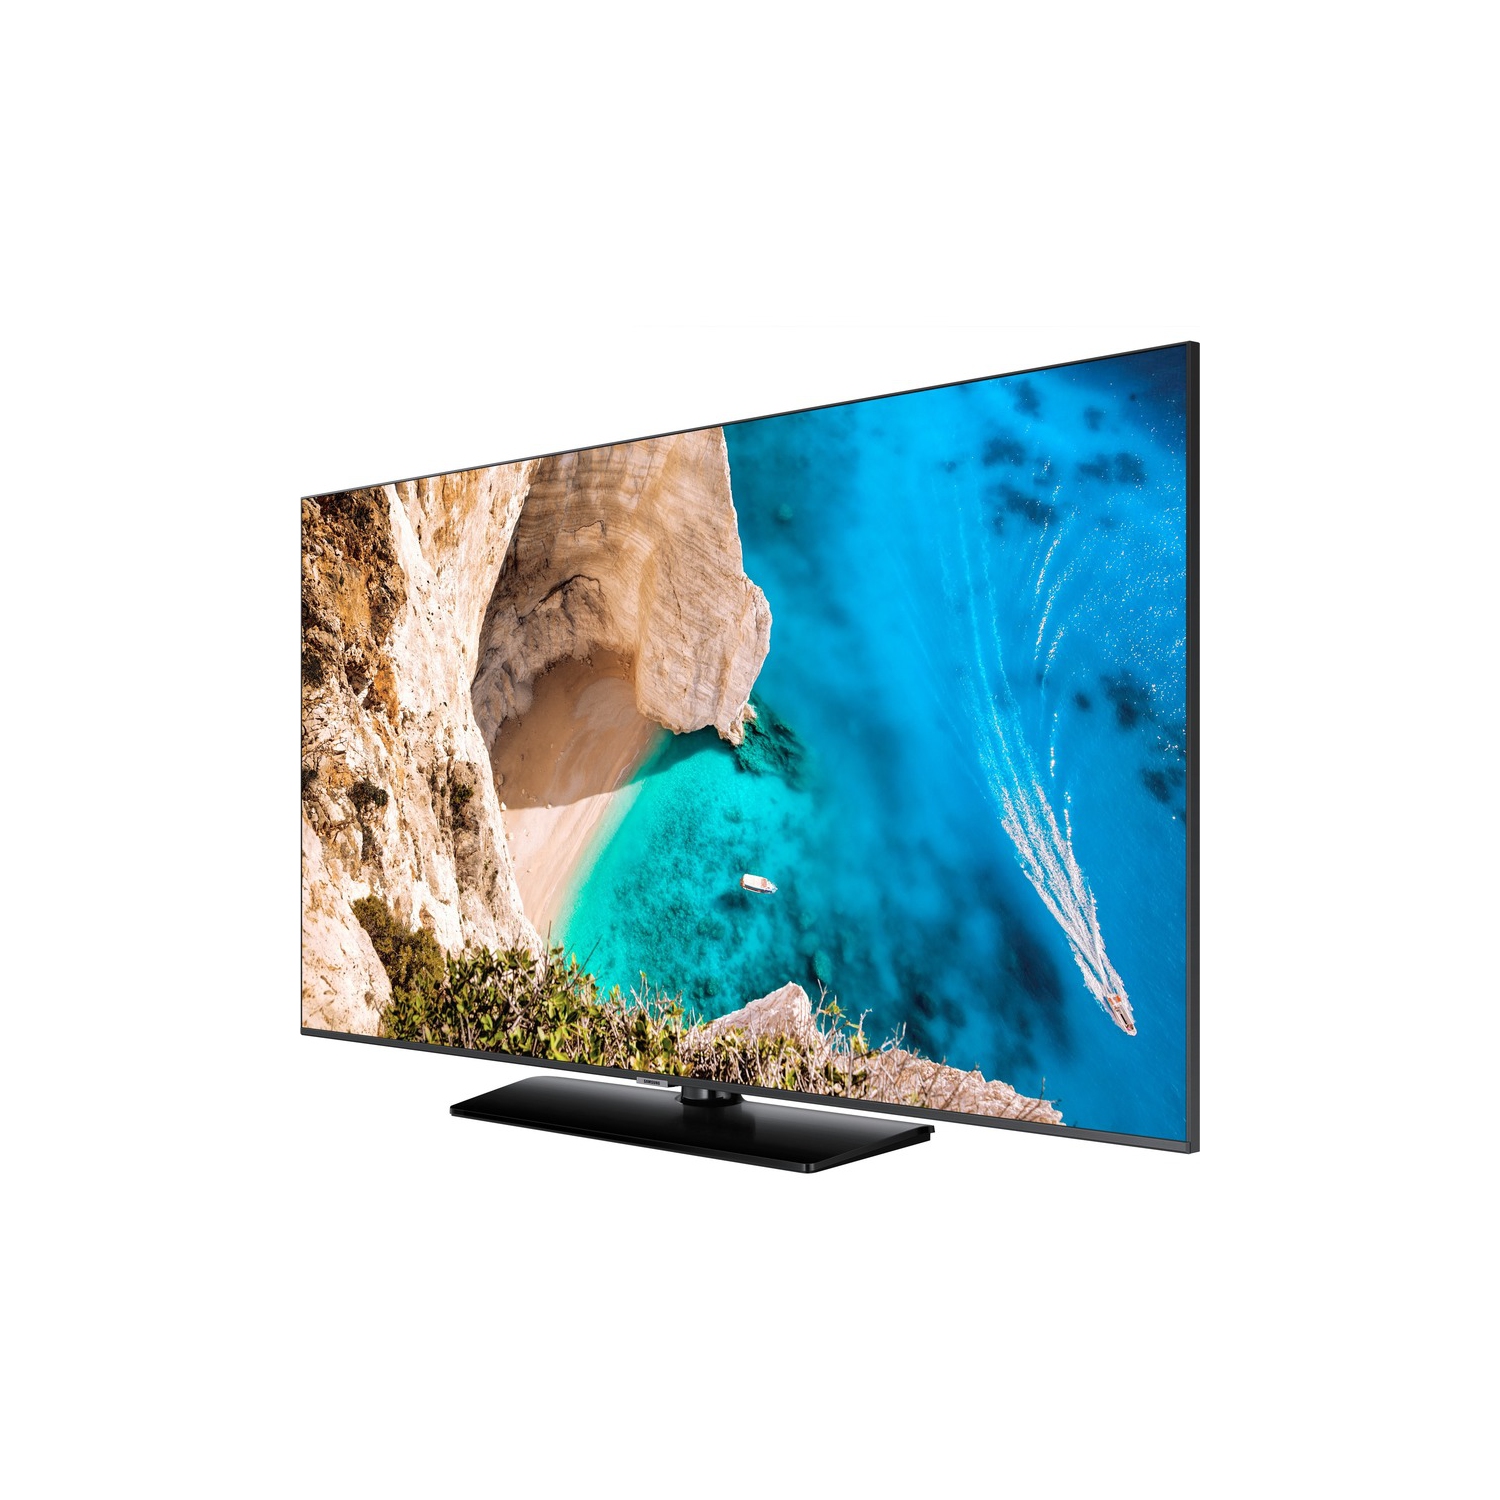 Samsung NT670U Series 50" 4K UHD LED TV - (HG50NT670UFXZA)